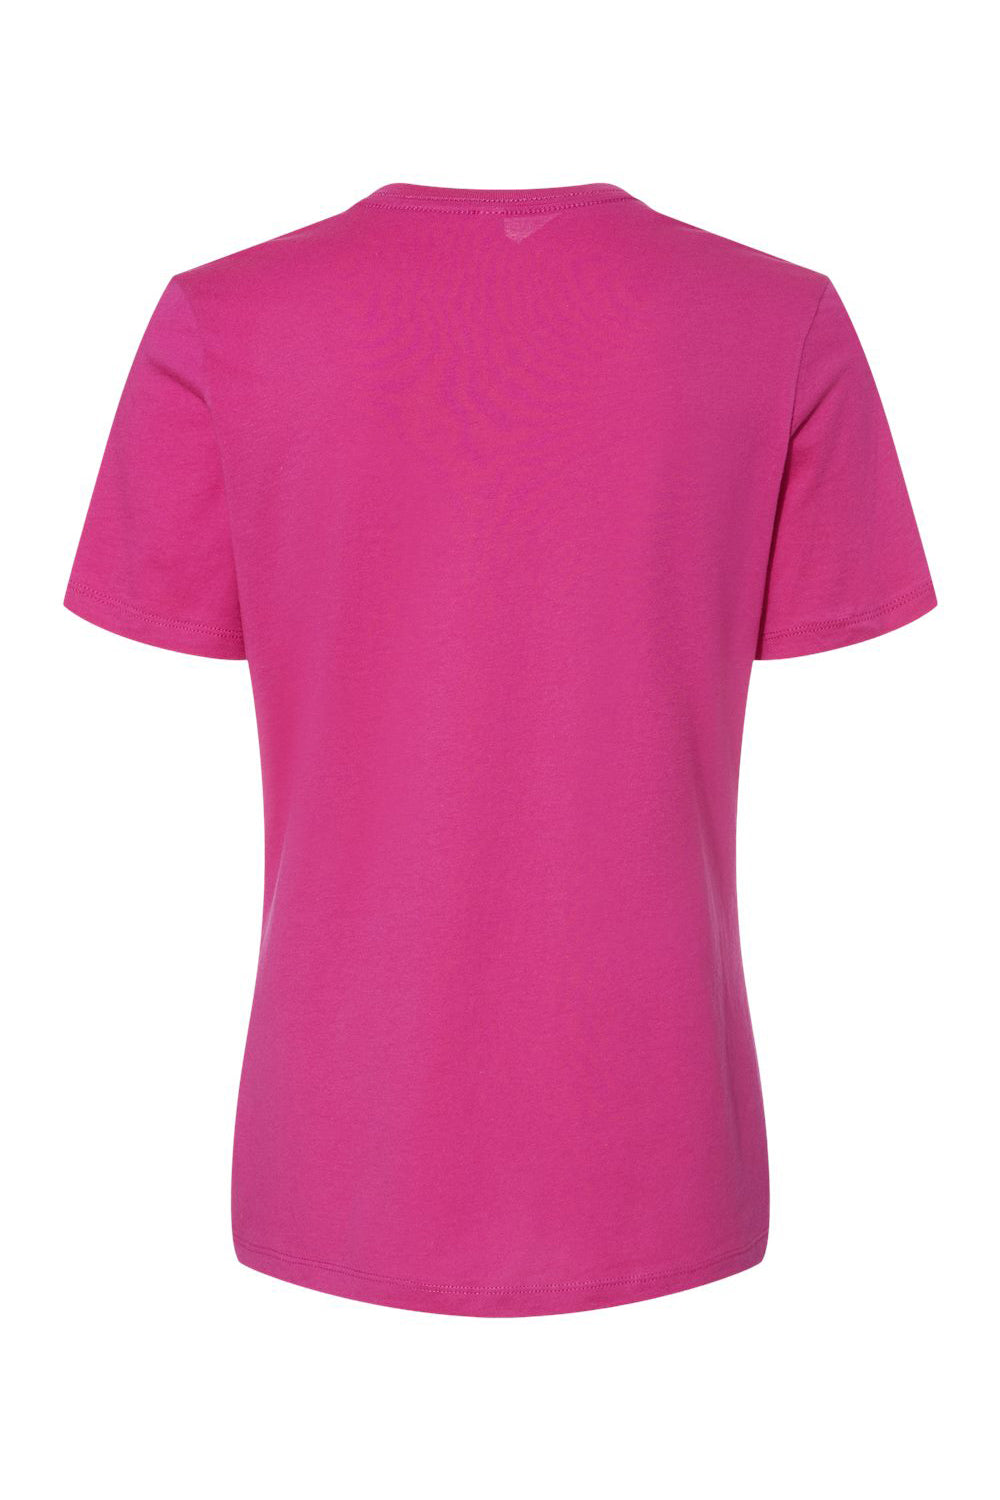 Bella + Canvas BC6400/B6400/6400 Womens Relaxed Jersey Short Sleeve Crewneck T-Shirt Berry Pink Flat Back